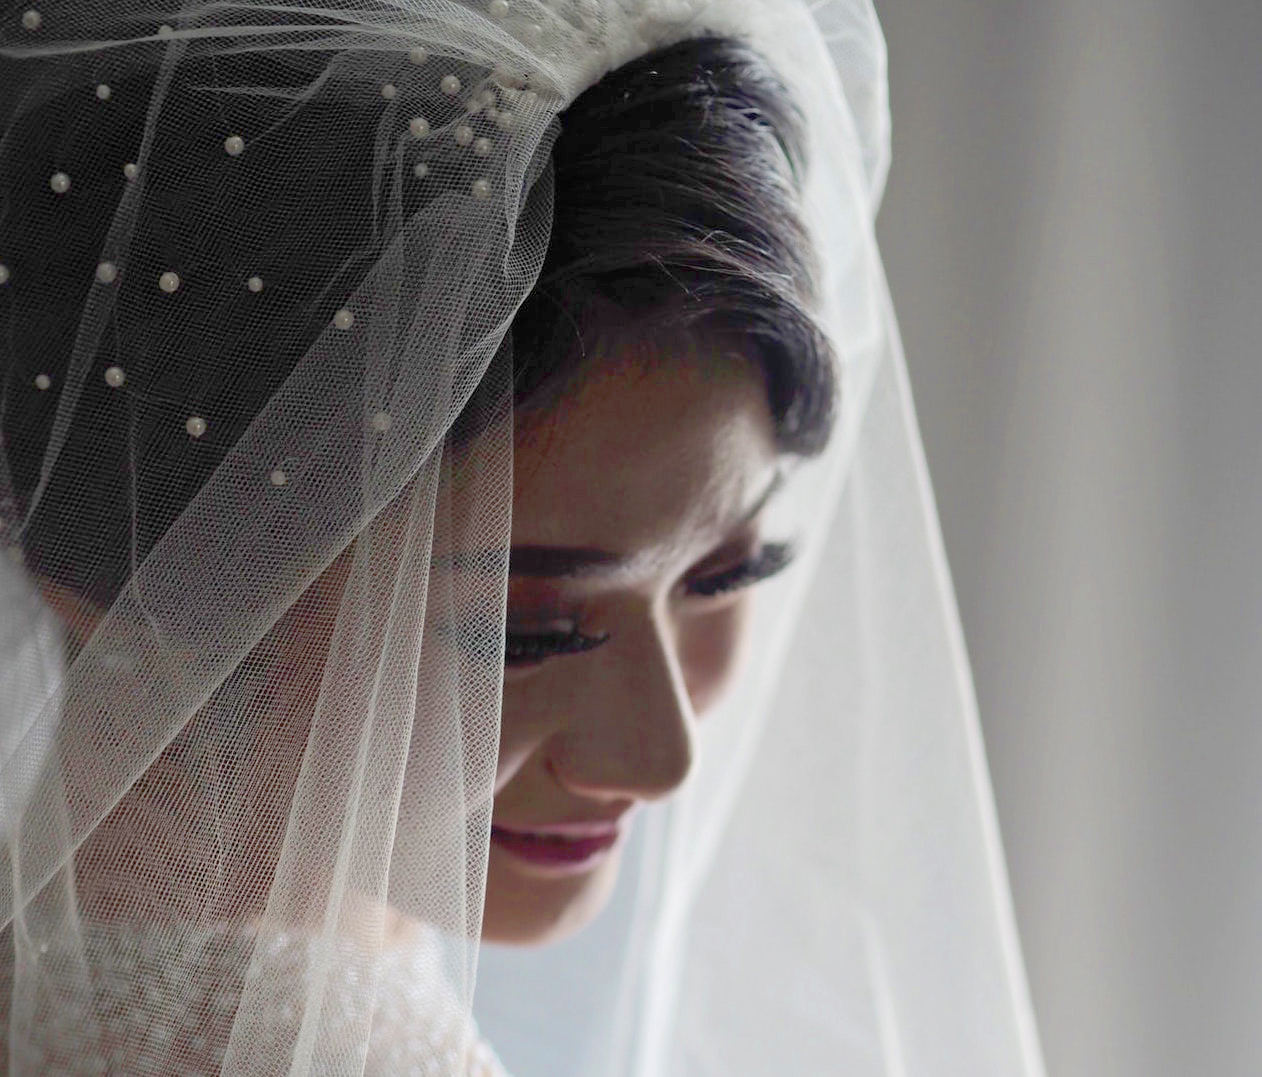 Wedding Makeup - Bride With Beaded Wedding Veil